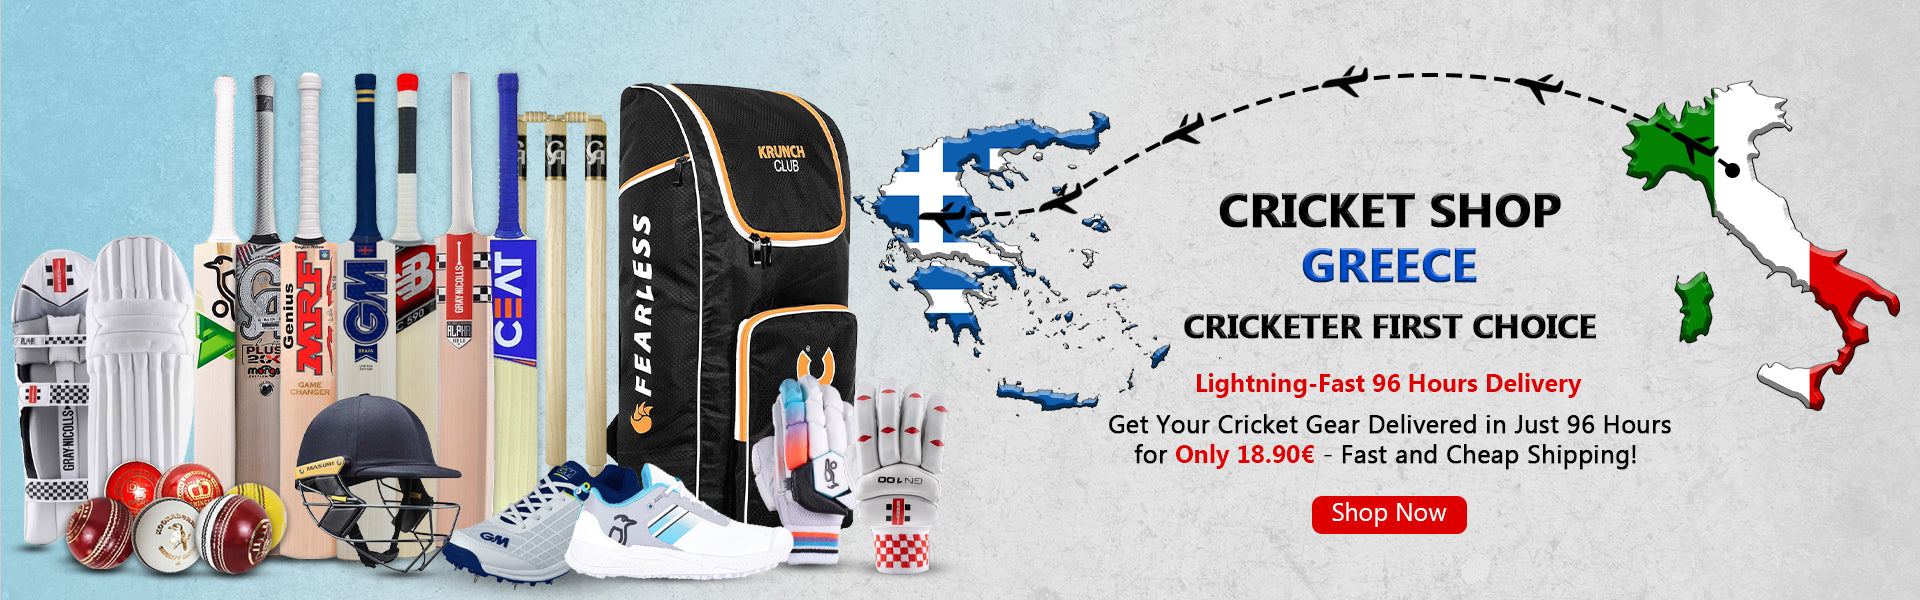 Cricket Shop Greece | Cricketer first Choice